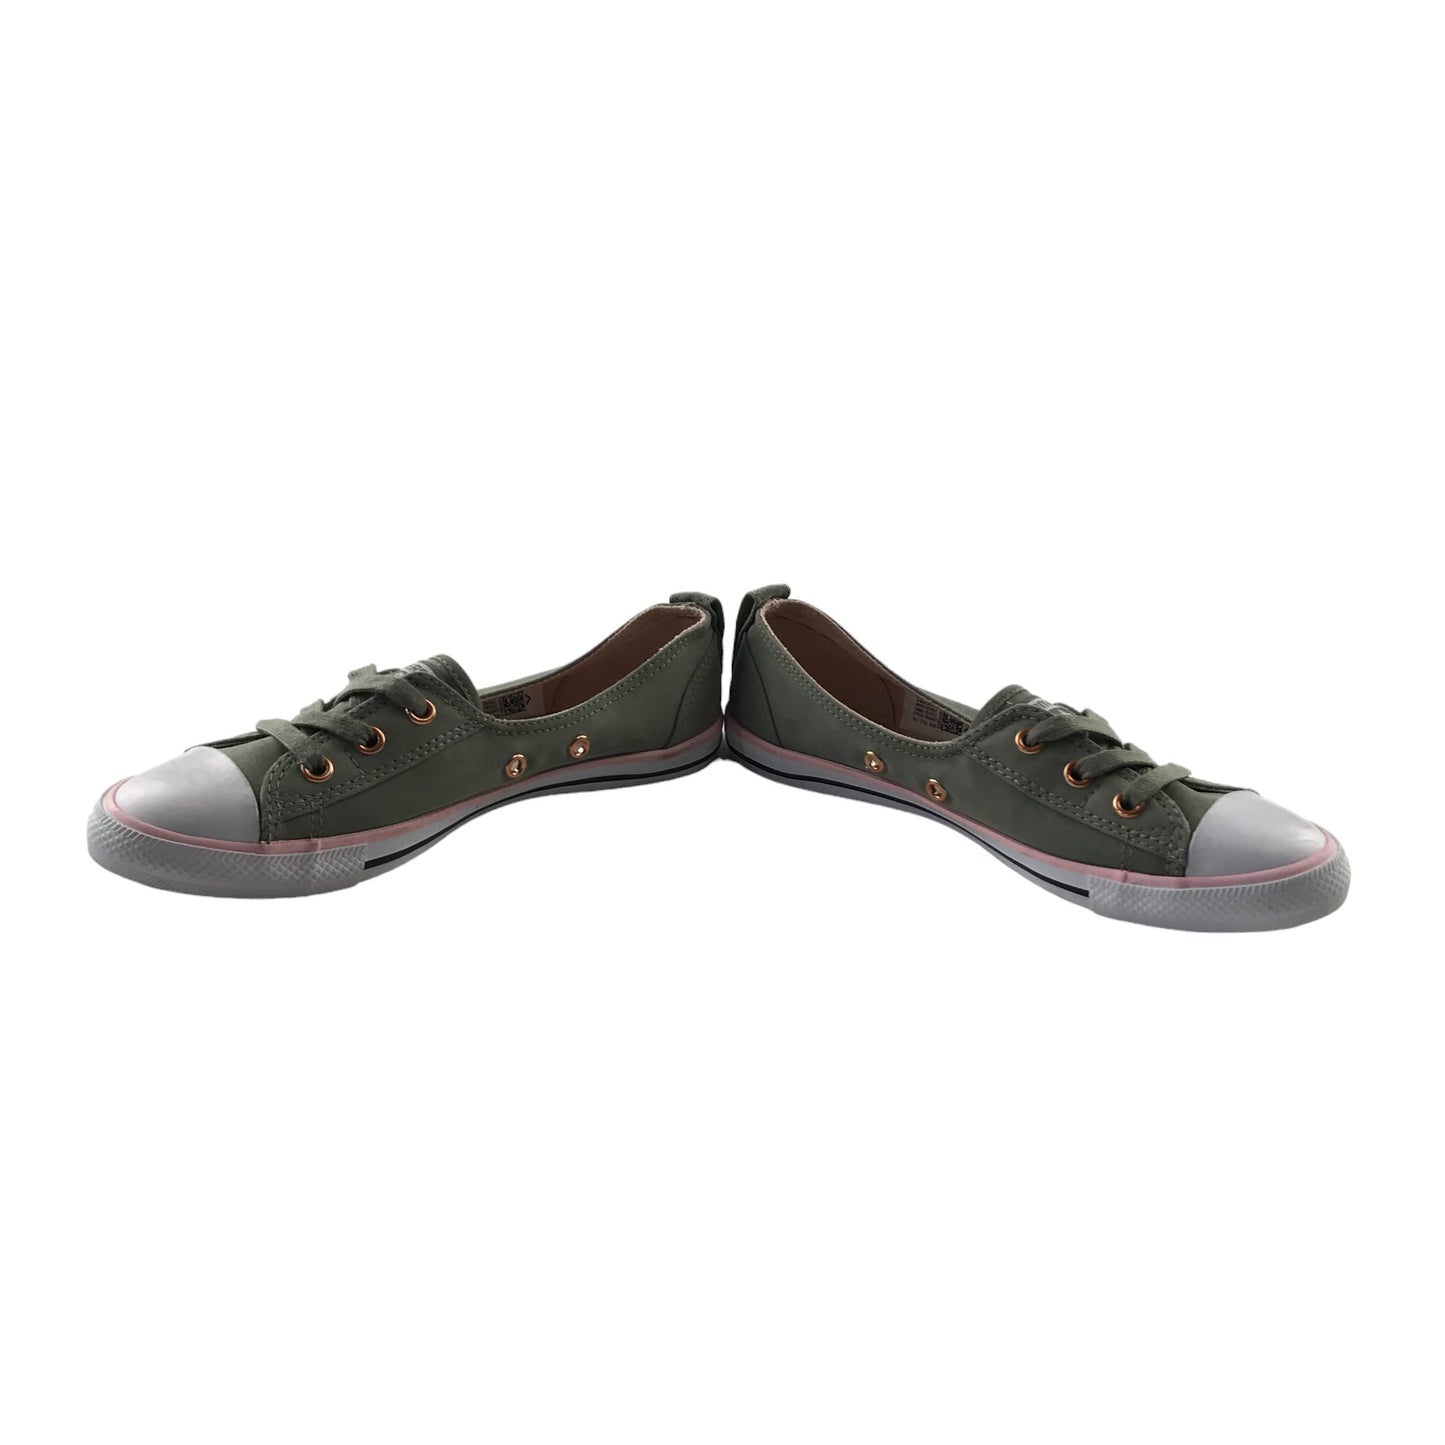 Converse Trainers Shoe Size 3.5 Khaki Green Ballet Style Lace Slip